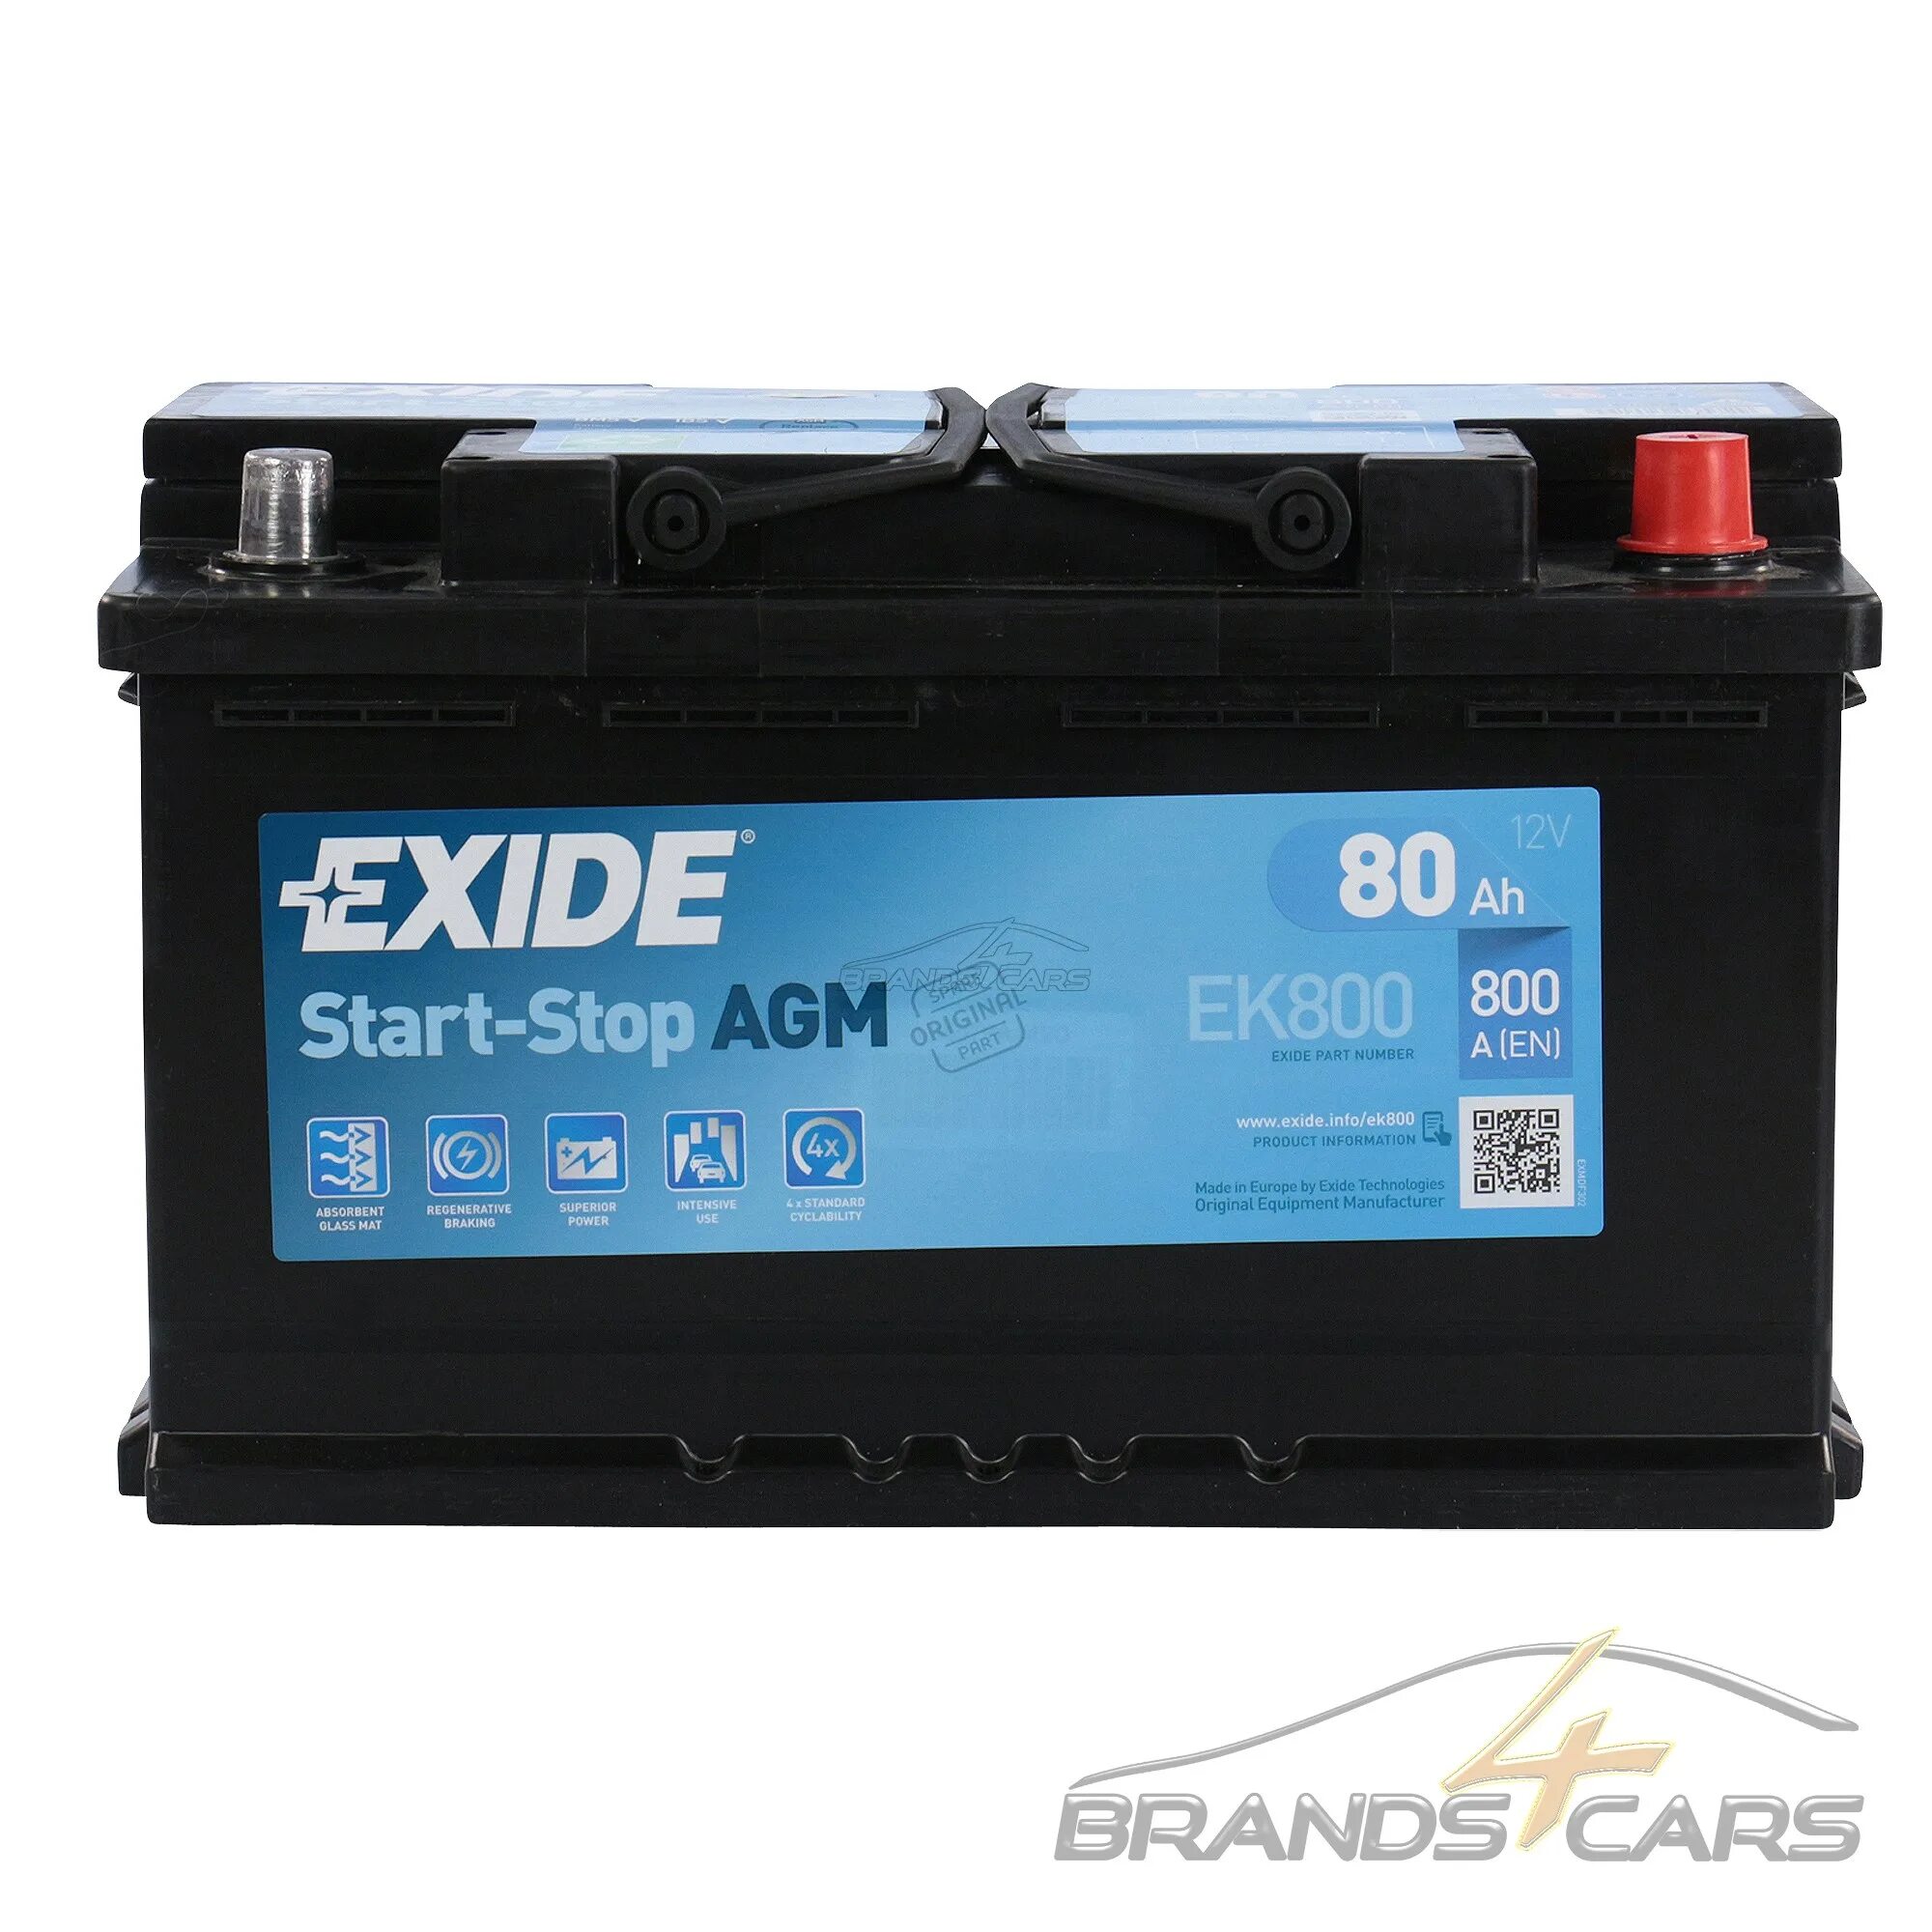 Battery 80. Аккумулятор Exide AGM 80ah. Exide ek800 аккумулятор. Exide AGM 80. Exide ek800 AGM.